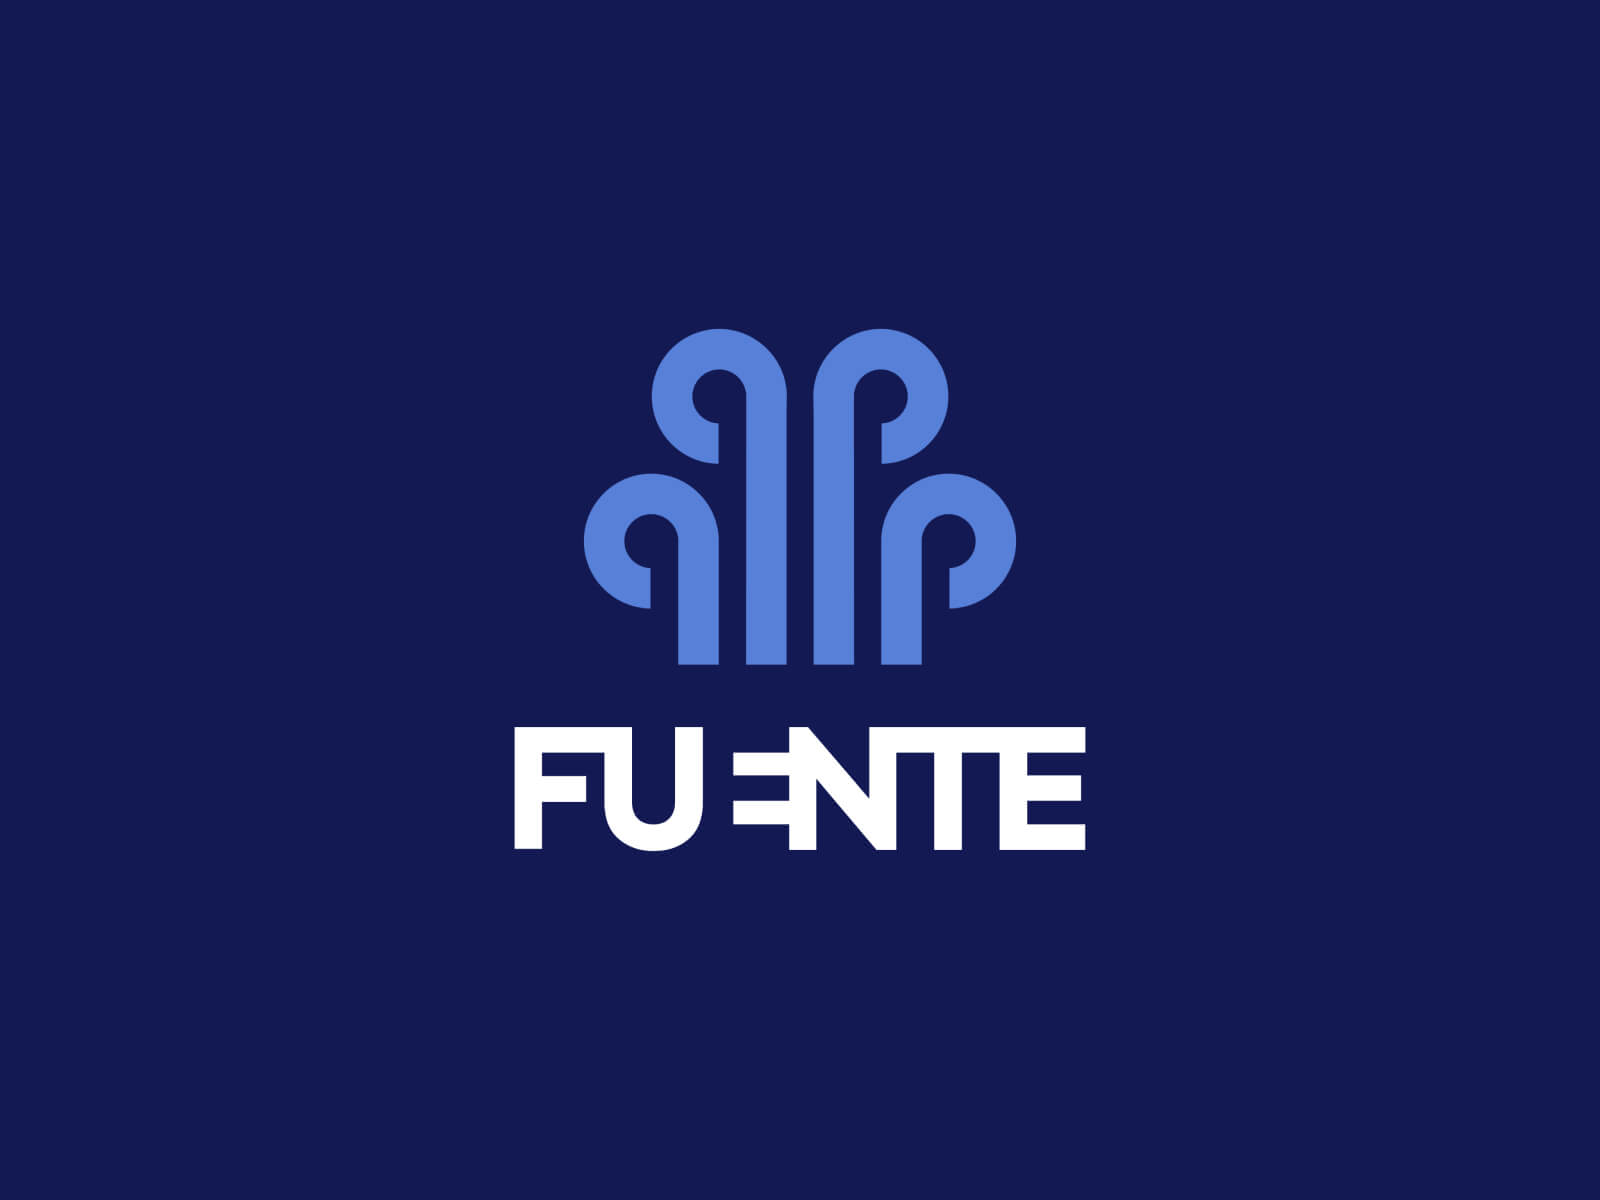 Fuente logo design